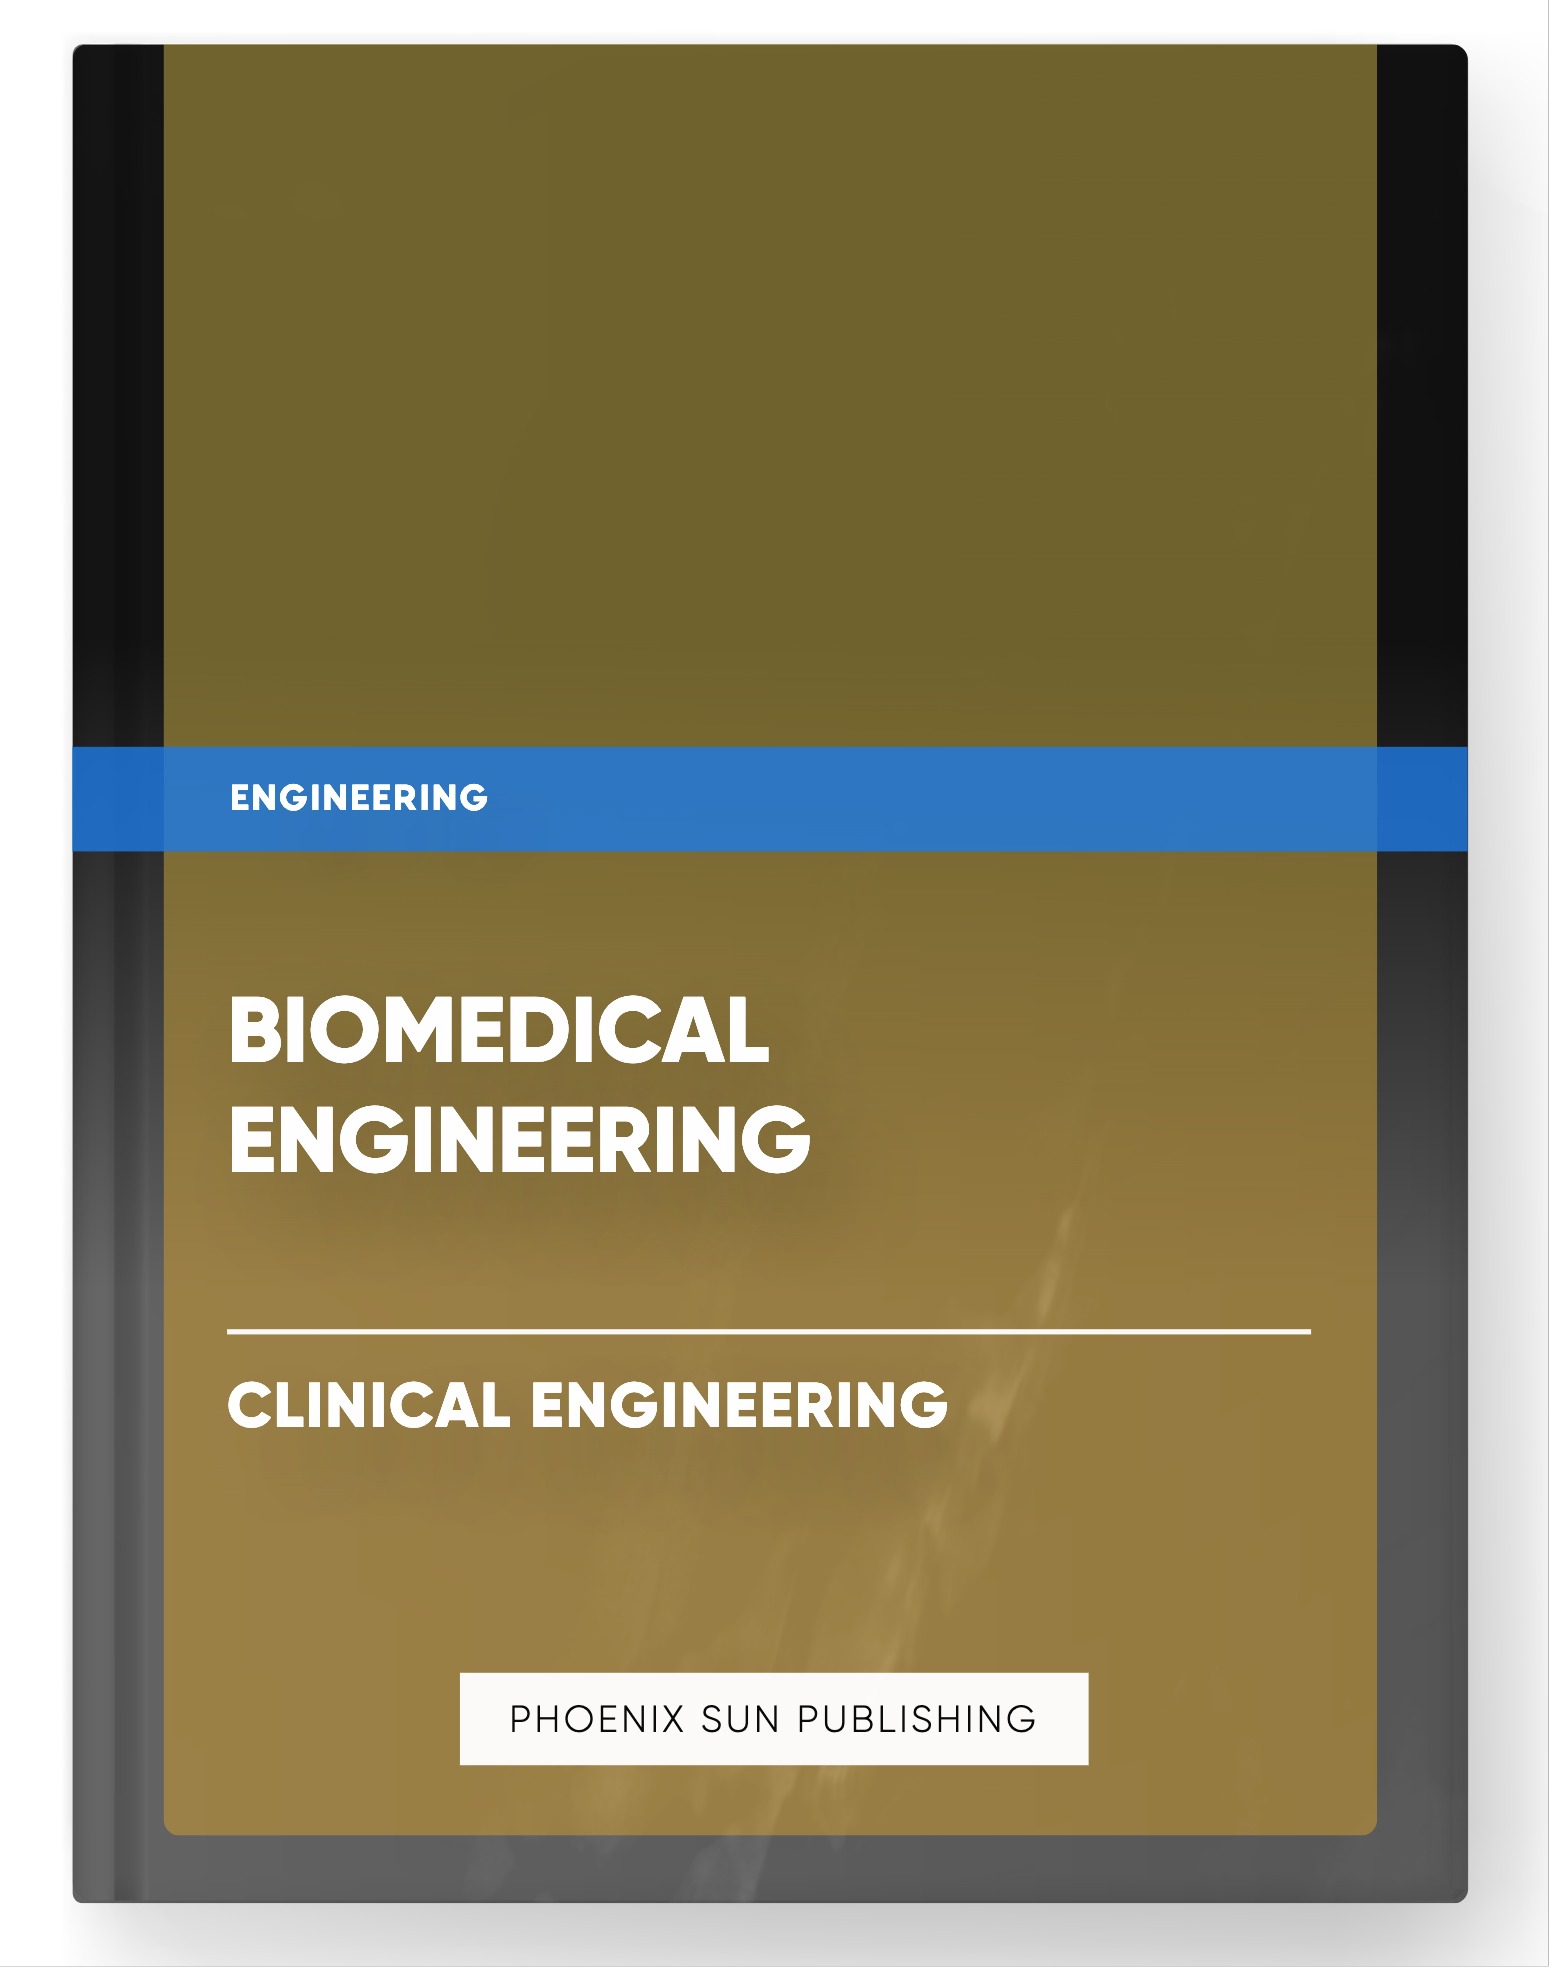 Biomedical Engineering – Clinical Engineering